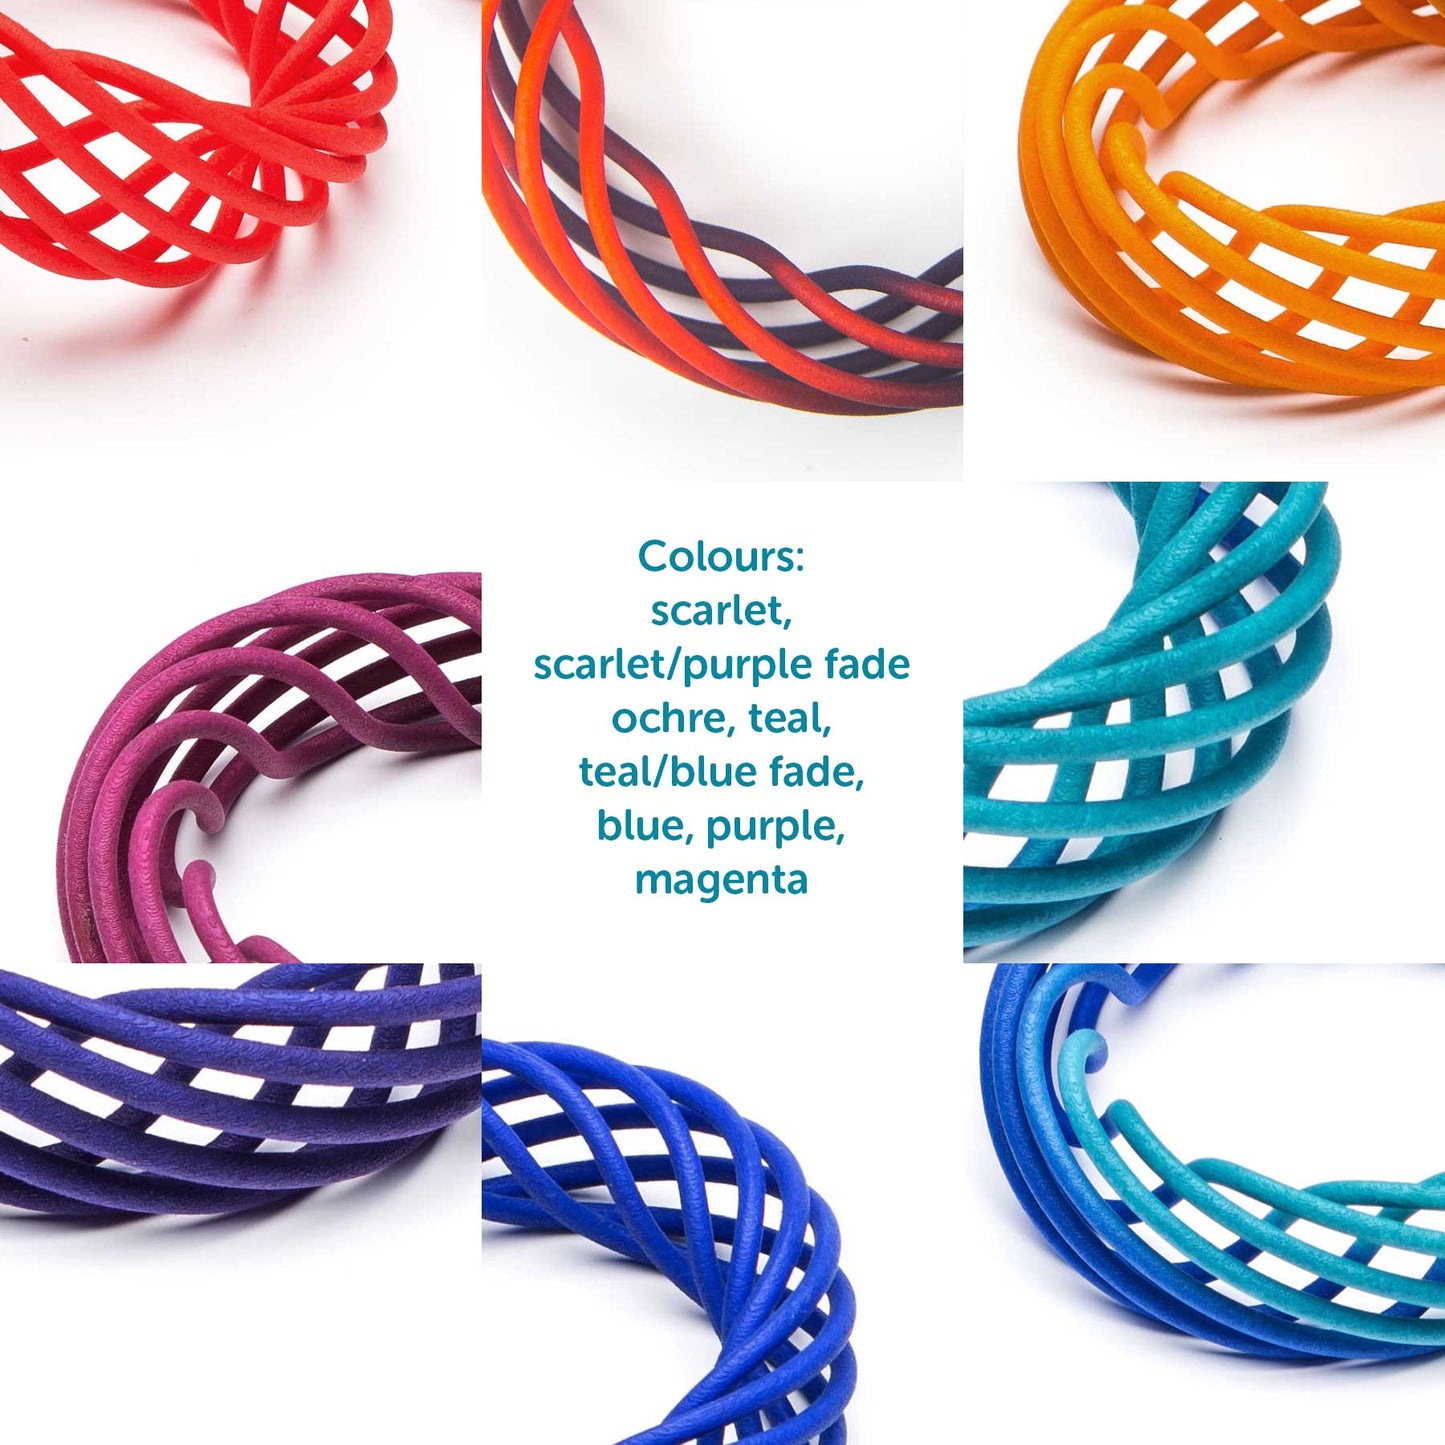 Vortex 3D printed nylon jewellery colour range – scarlet, scarlet / purple fade, ochre, teal, teal / blue fade, blue, purple, magenta